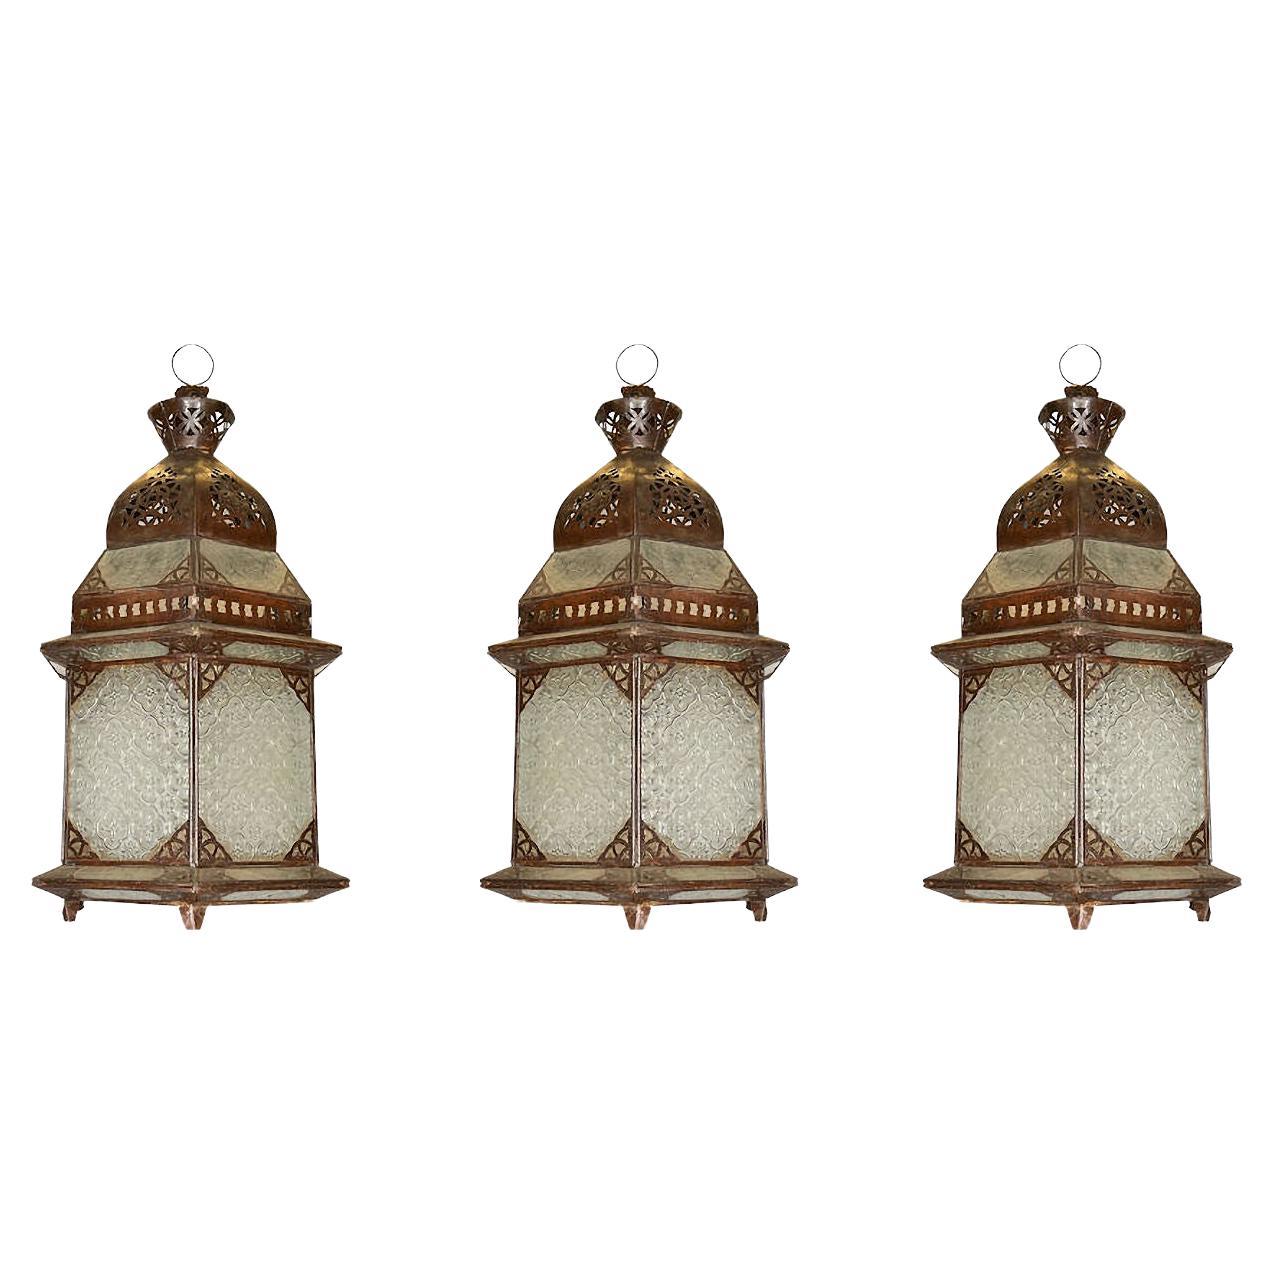 Set of Three Oriental Style Metal Lanterns